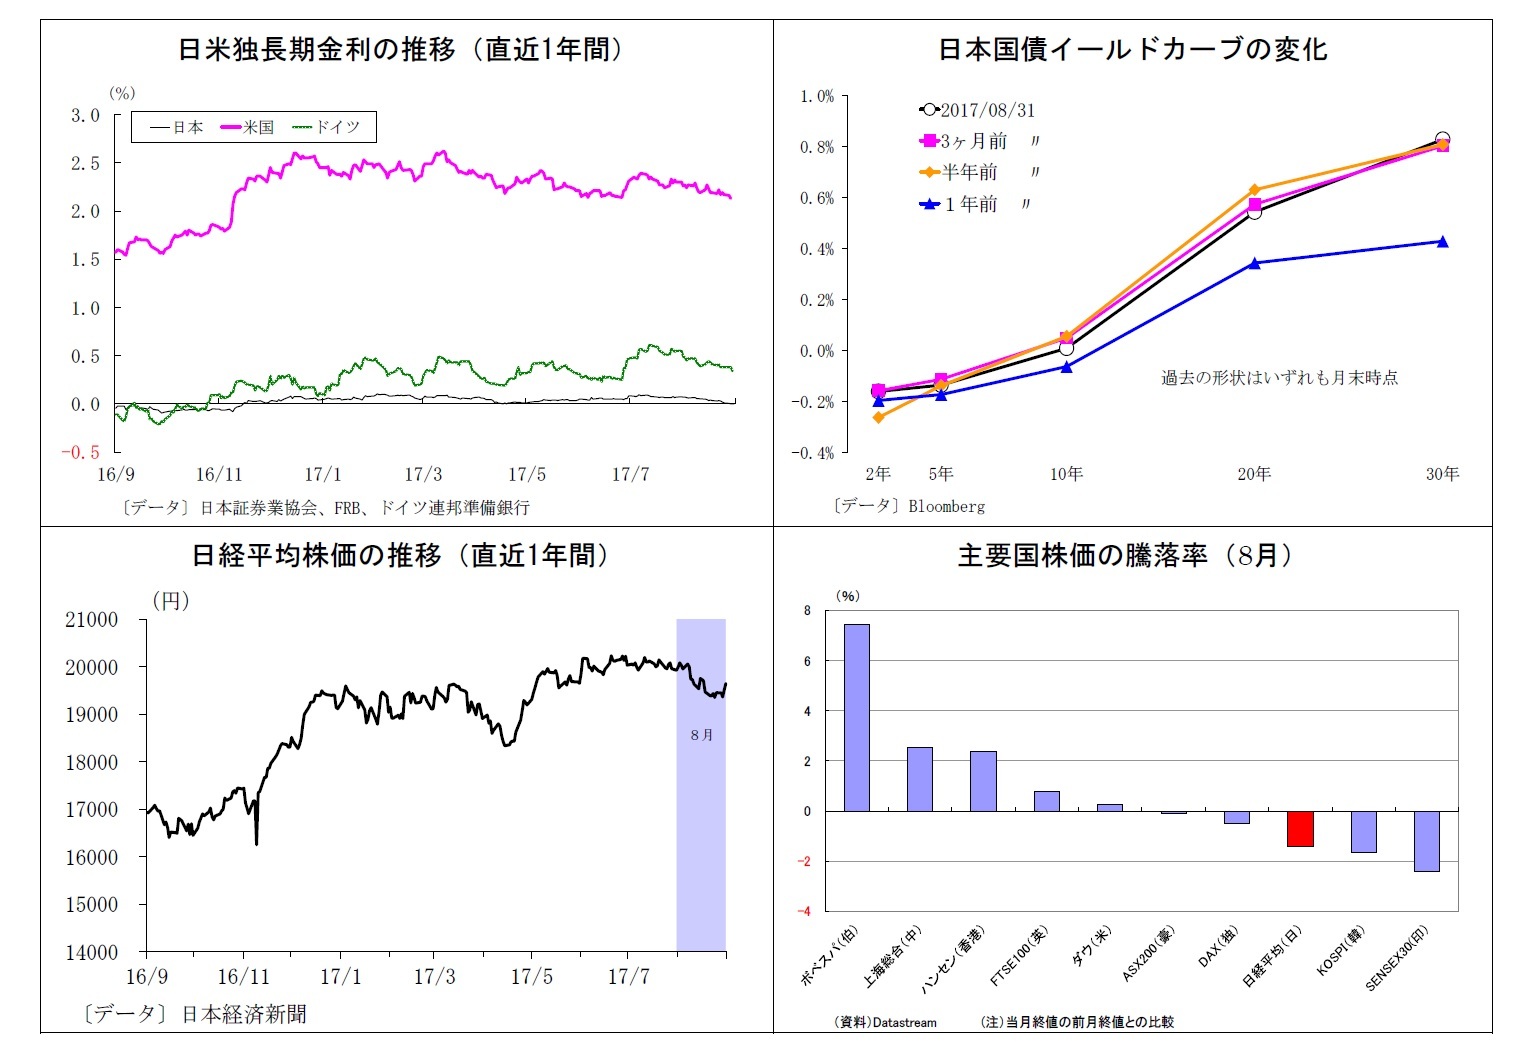 日米独長期金利の推移（直近1年間）/日本国債イールドカーブの変化/日経平均株価の推移（直近1年間）/主要国株価の騰落率（8月）